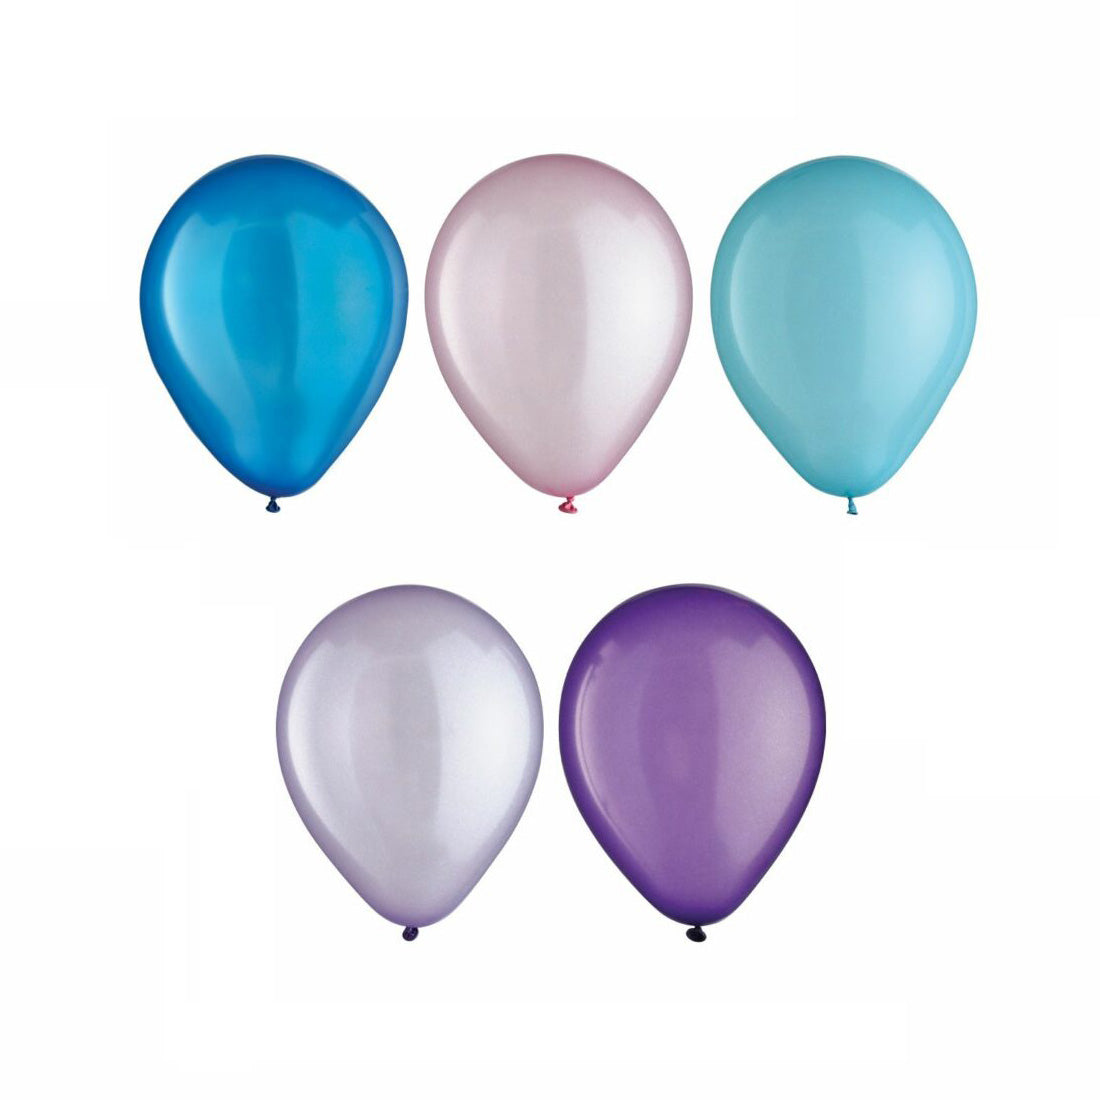 Cosmic Pearl Latex Balloons Assortments 11in 15pcs